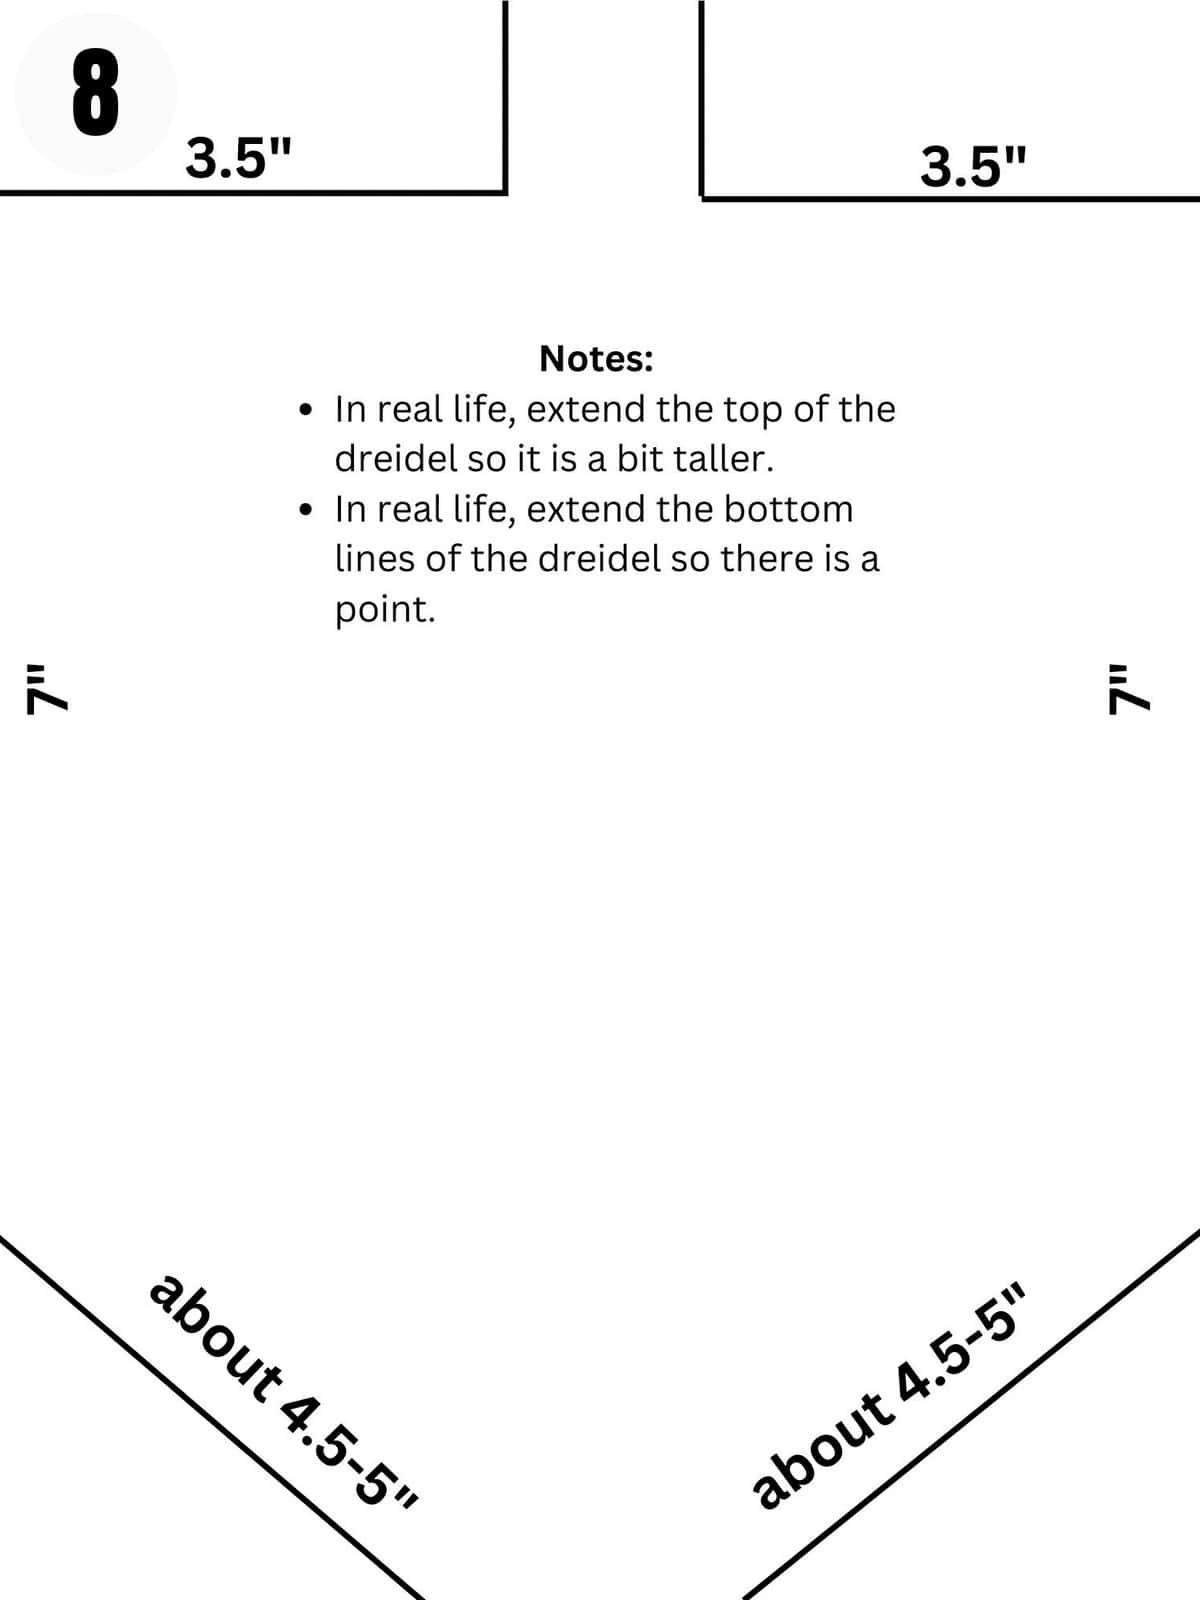 Diagram showing dimensions of the hot dog dreidel shape.